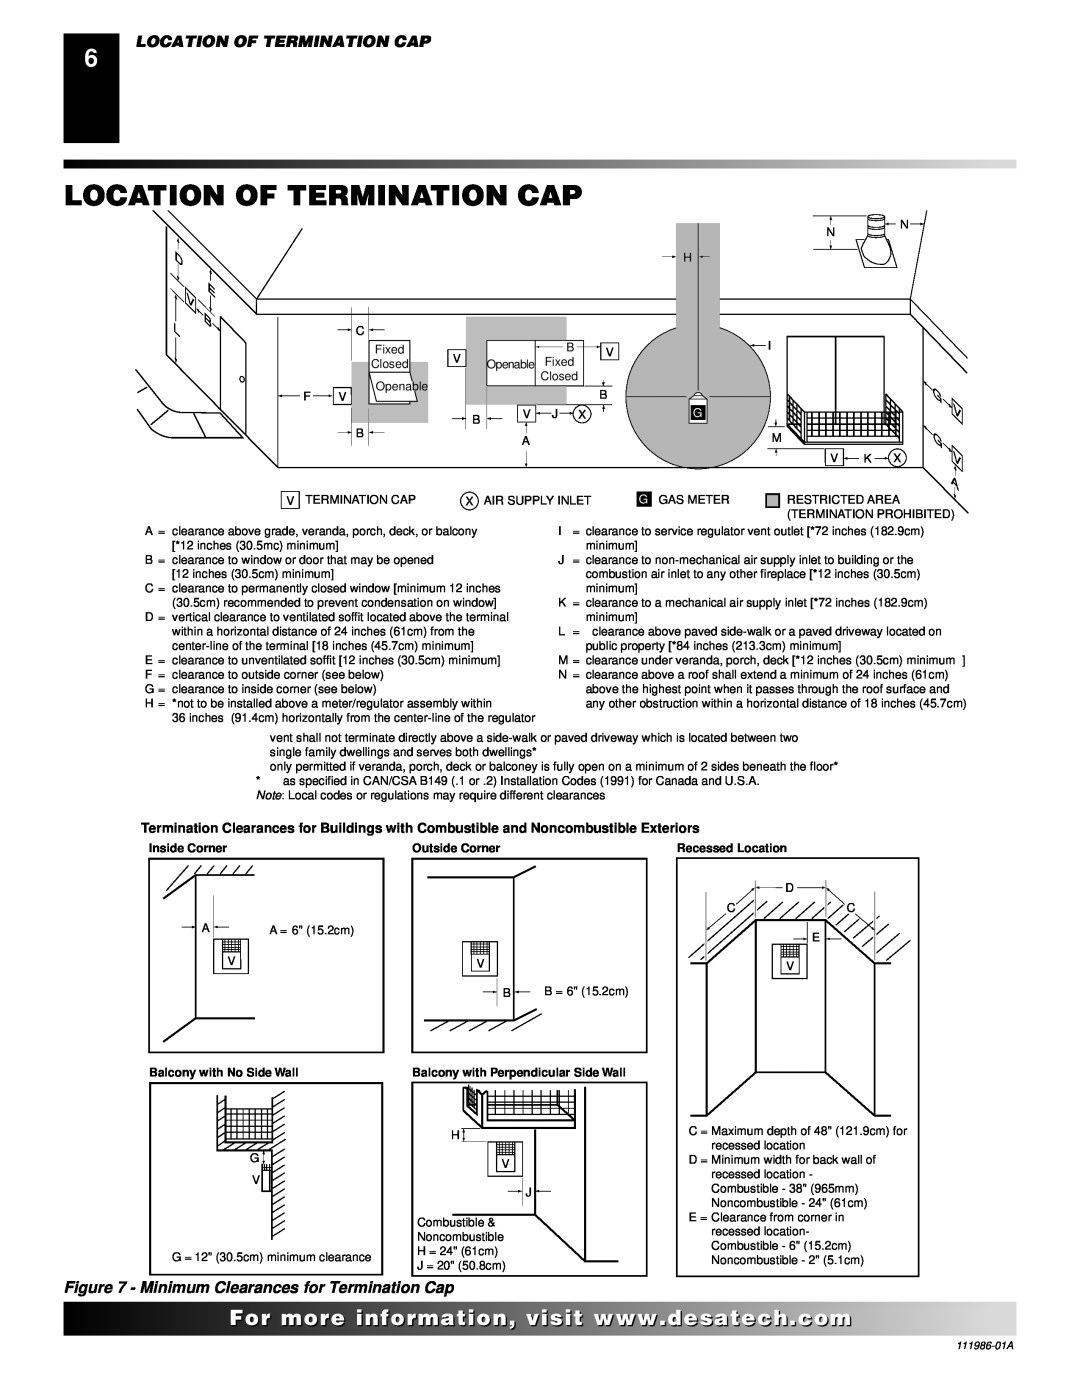 Desa T32P Location Of Termination Cap, D E B L, V G V A, For..com, Minimum Clearances for Termination Cap, Inside Corner 